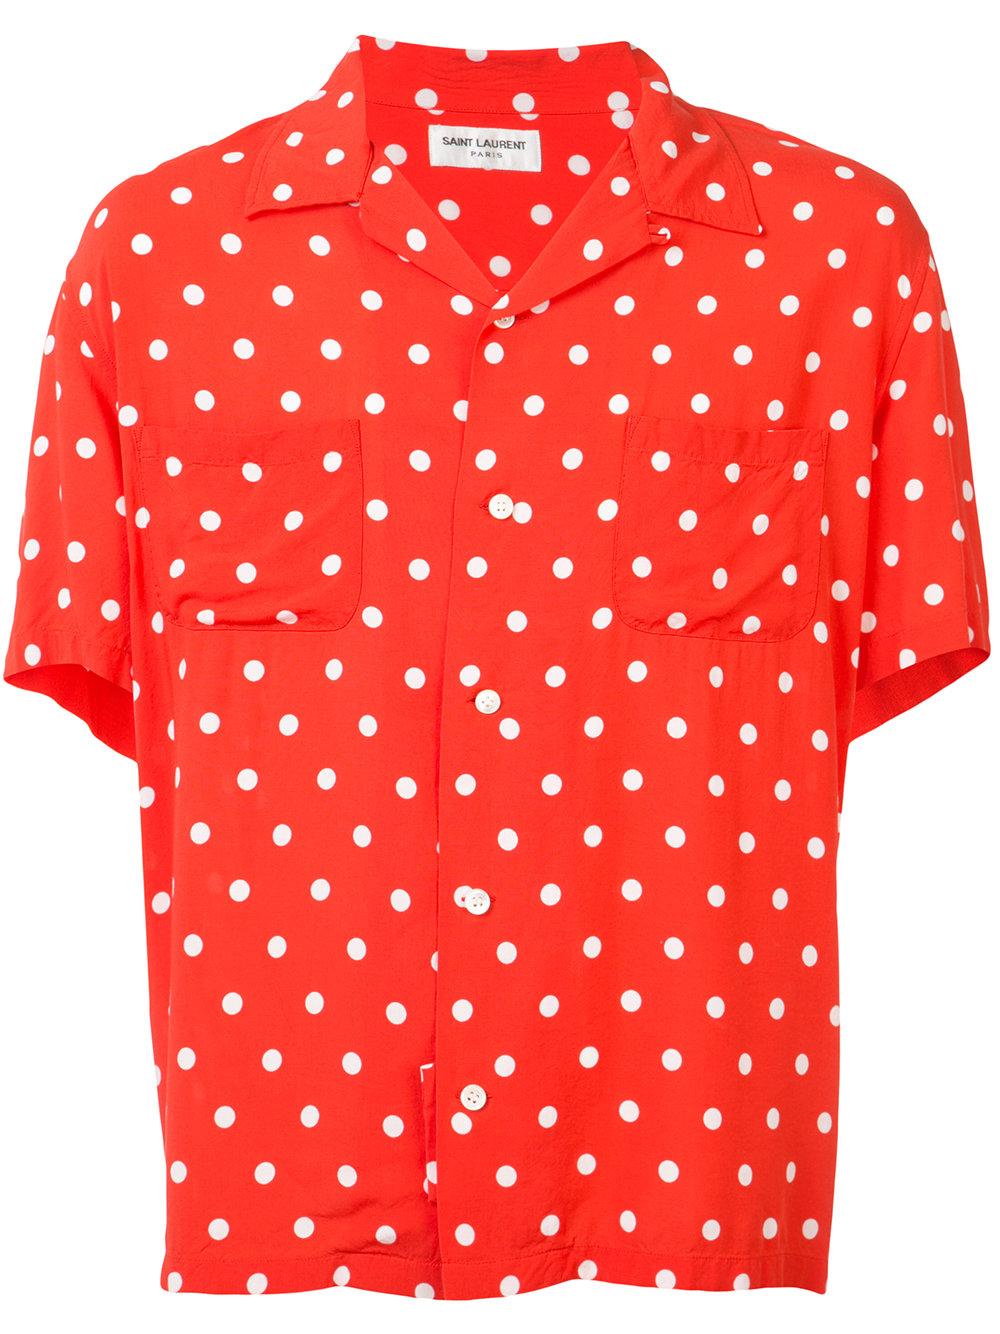 Lyst - Saint Laurent Polka Dot Patterned Shirt in Red for Men